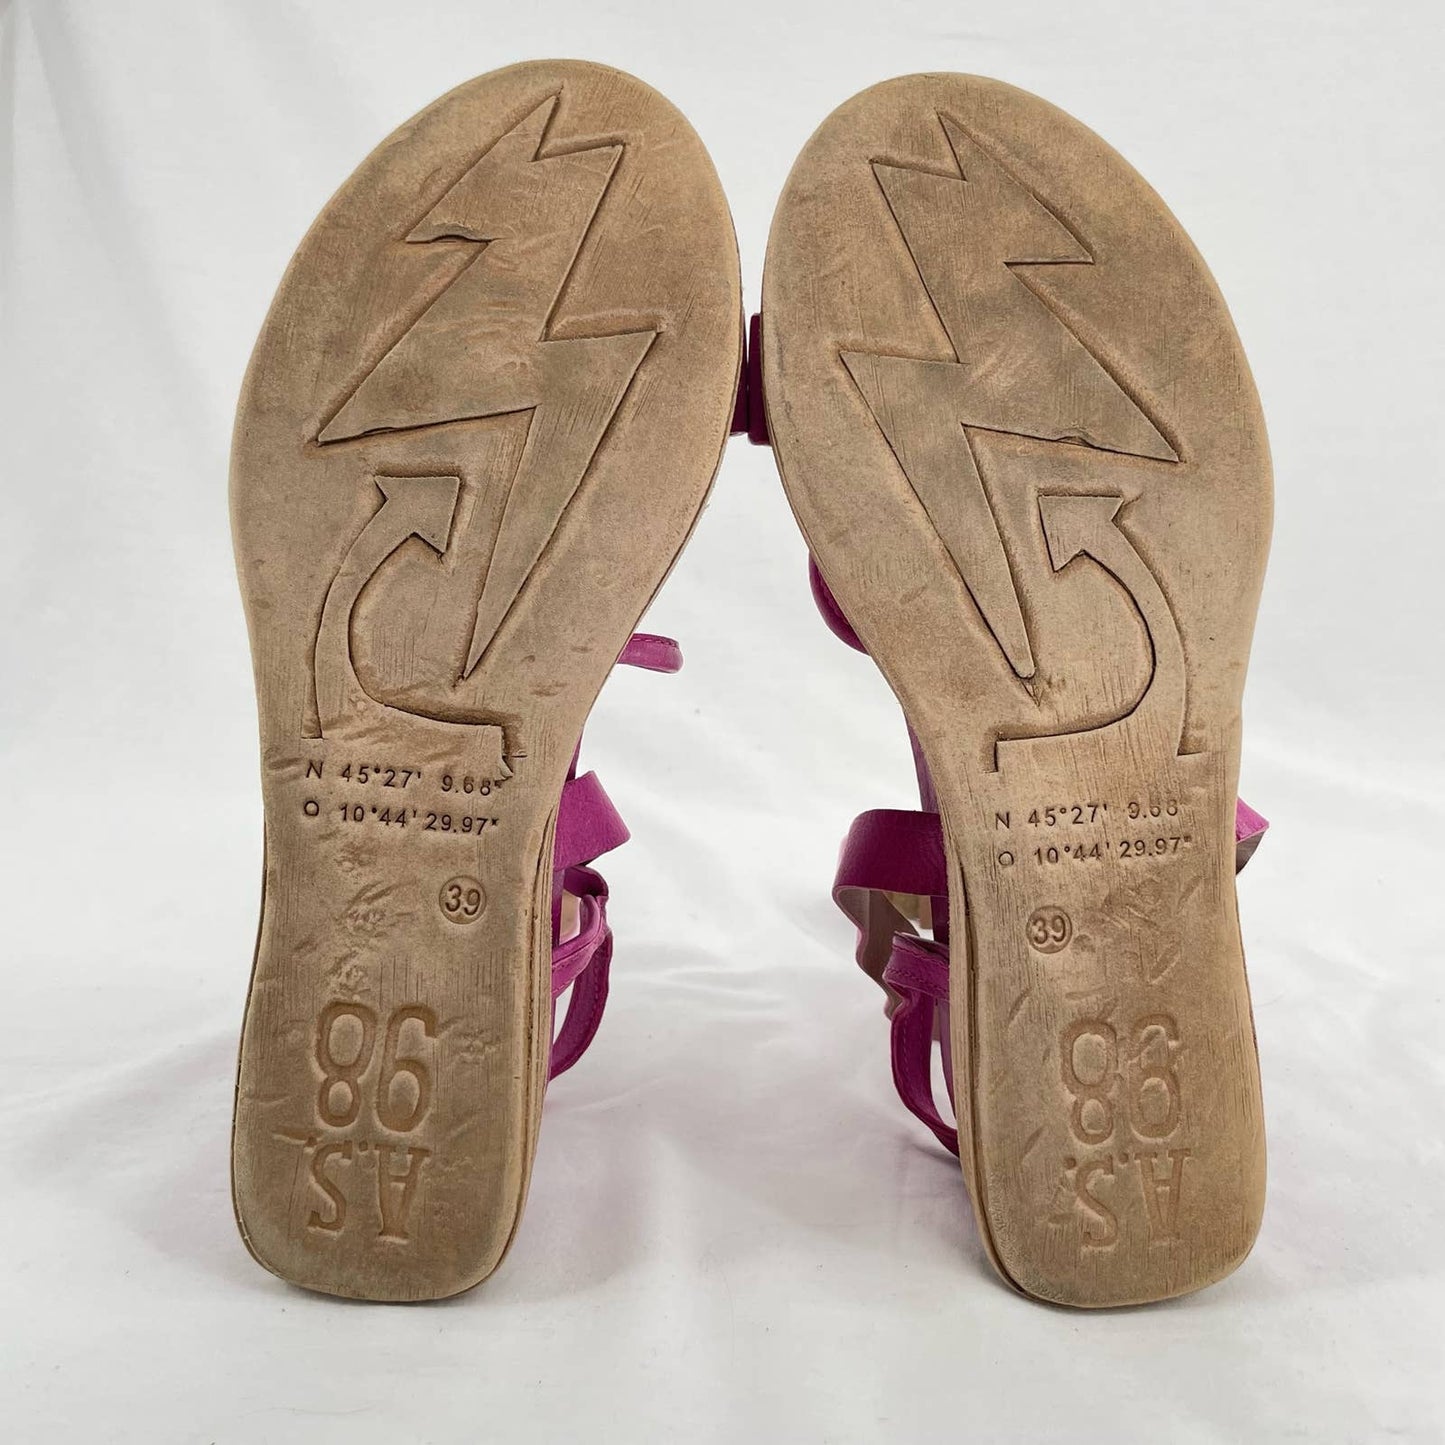 A.S.98 AS98 Labo Hot Pink Fuchsia Leather Wrap Platform Gladiator Sandals Size EU 39